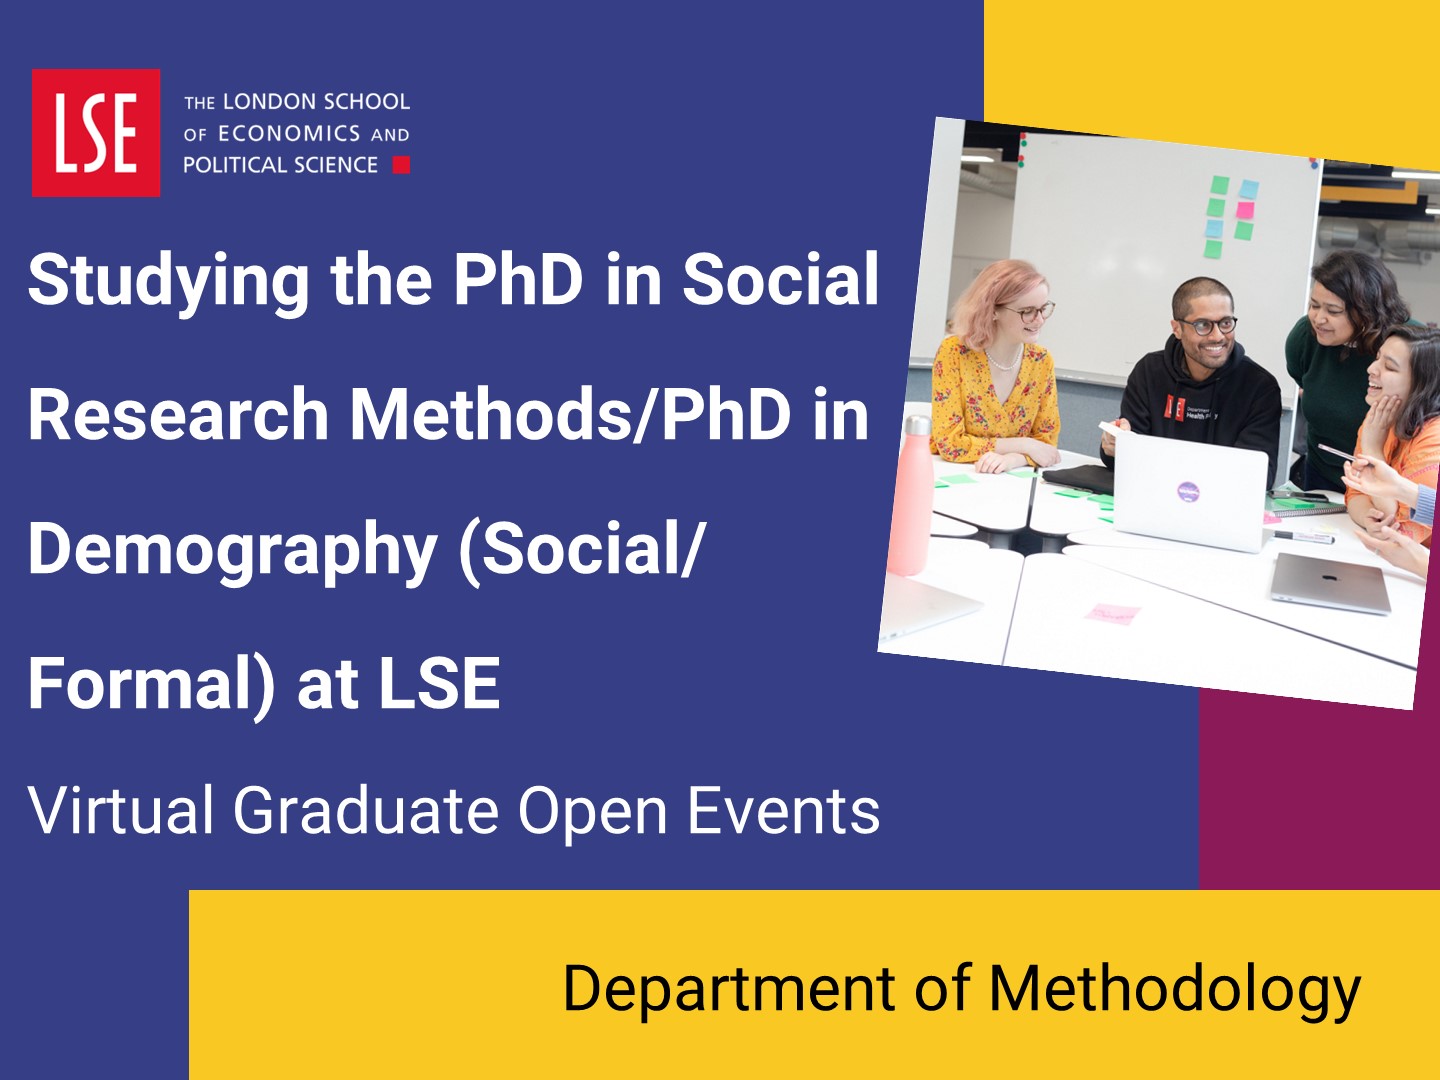 phd in social research methods